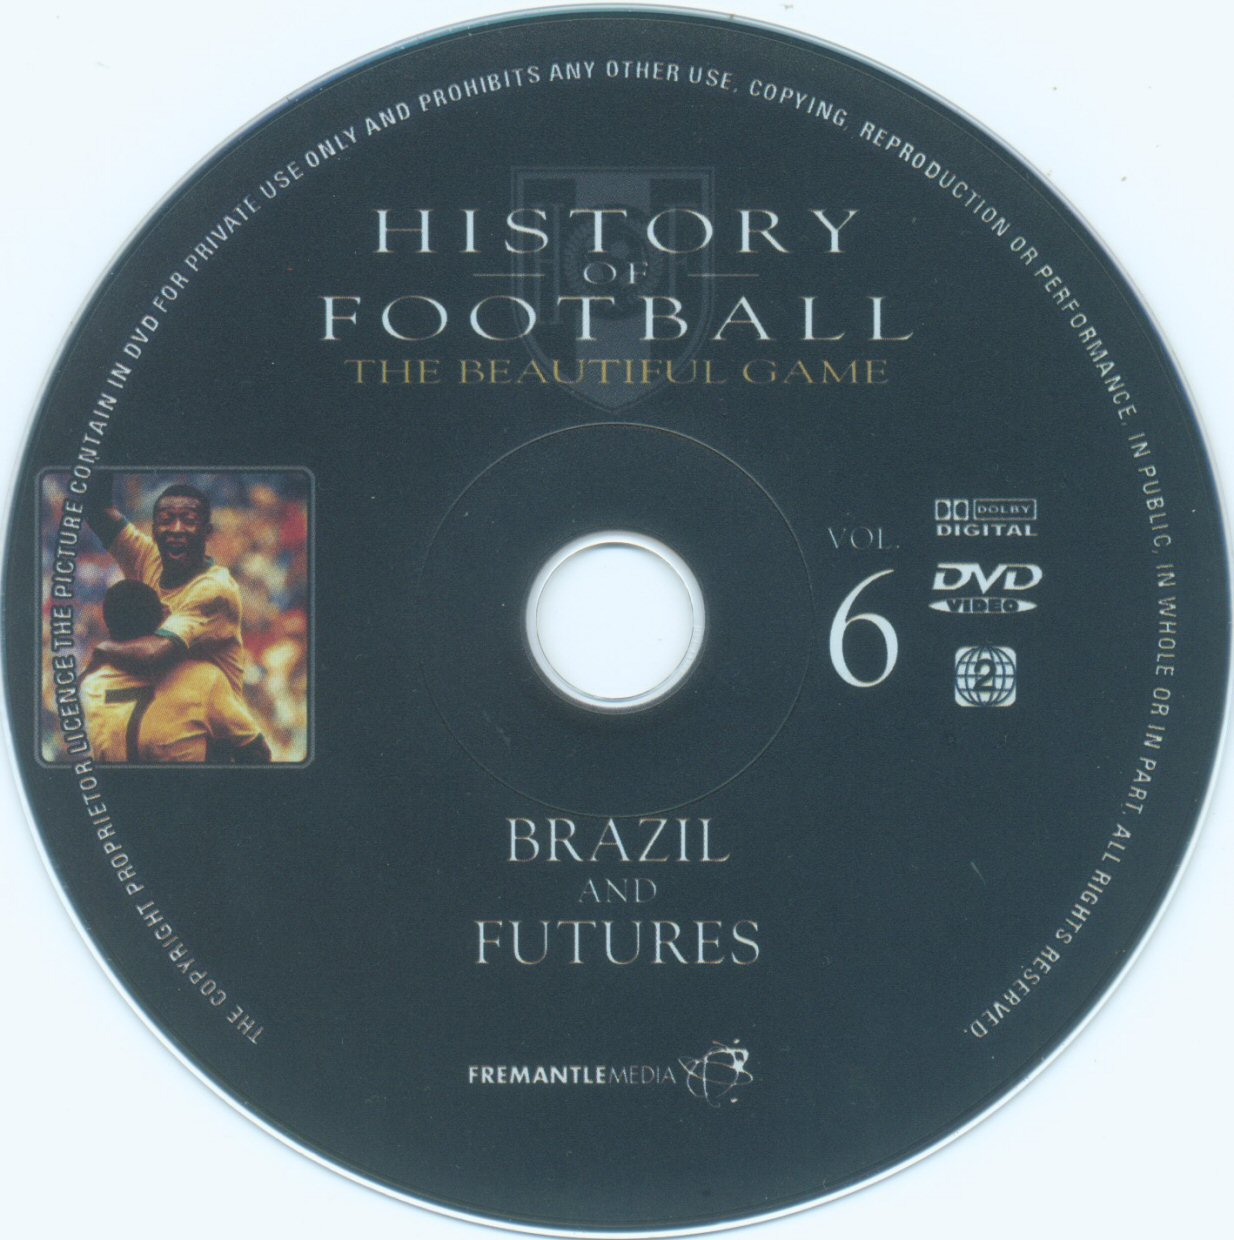 Click to view full size image -  DVD Cover - H - DVD - HISTORI OF  FOOTBALLl - POVJEST NOGOMETA 6 - CD - DVD - HISTORI OF  FOOTBALLl - POVJEST NOGOMETA 6 - CD.jpg